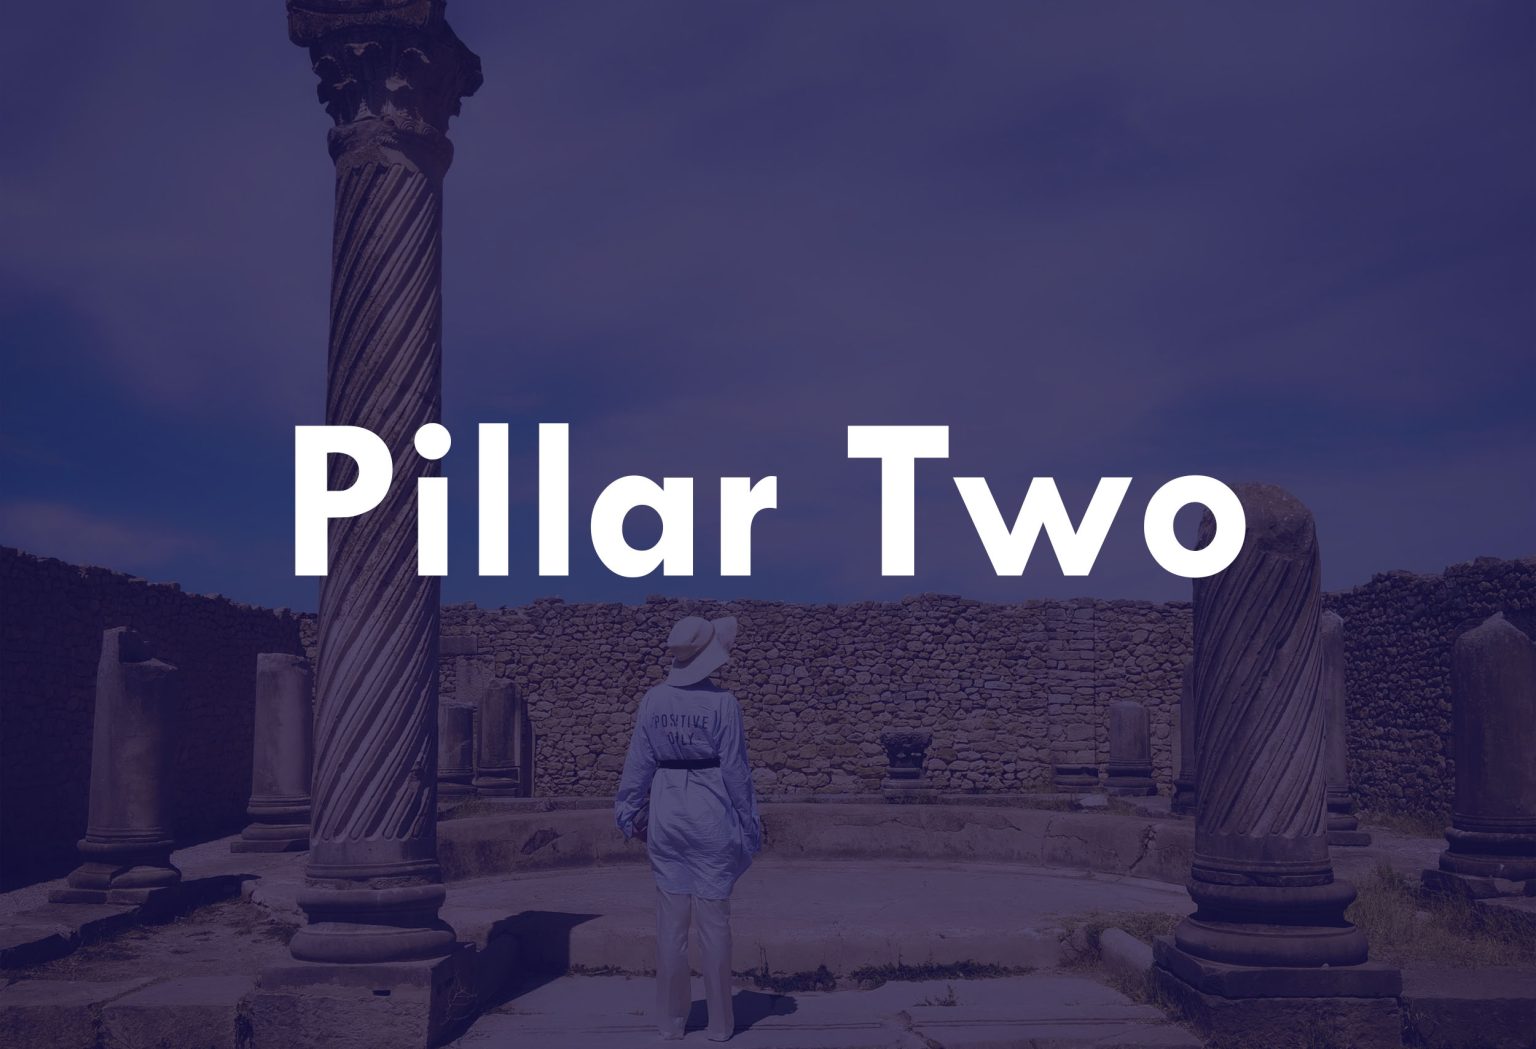 Pillar two